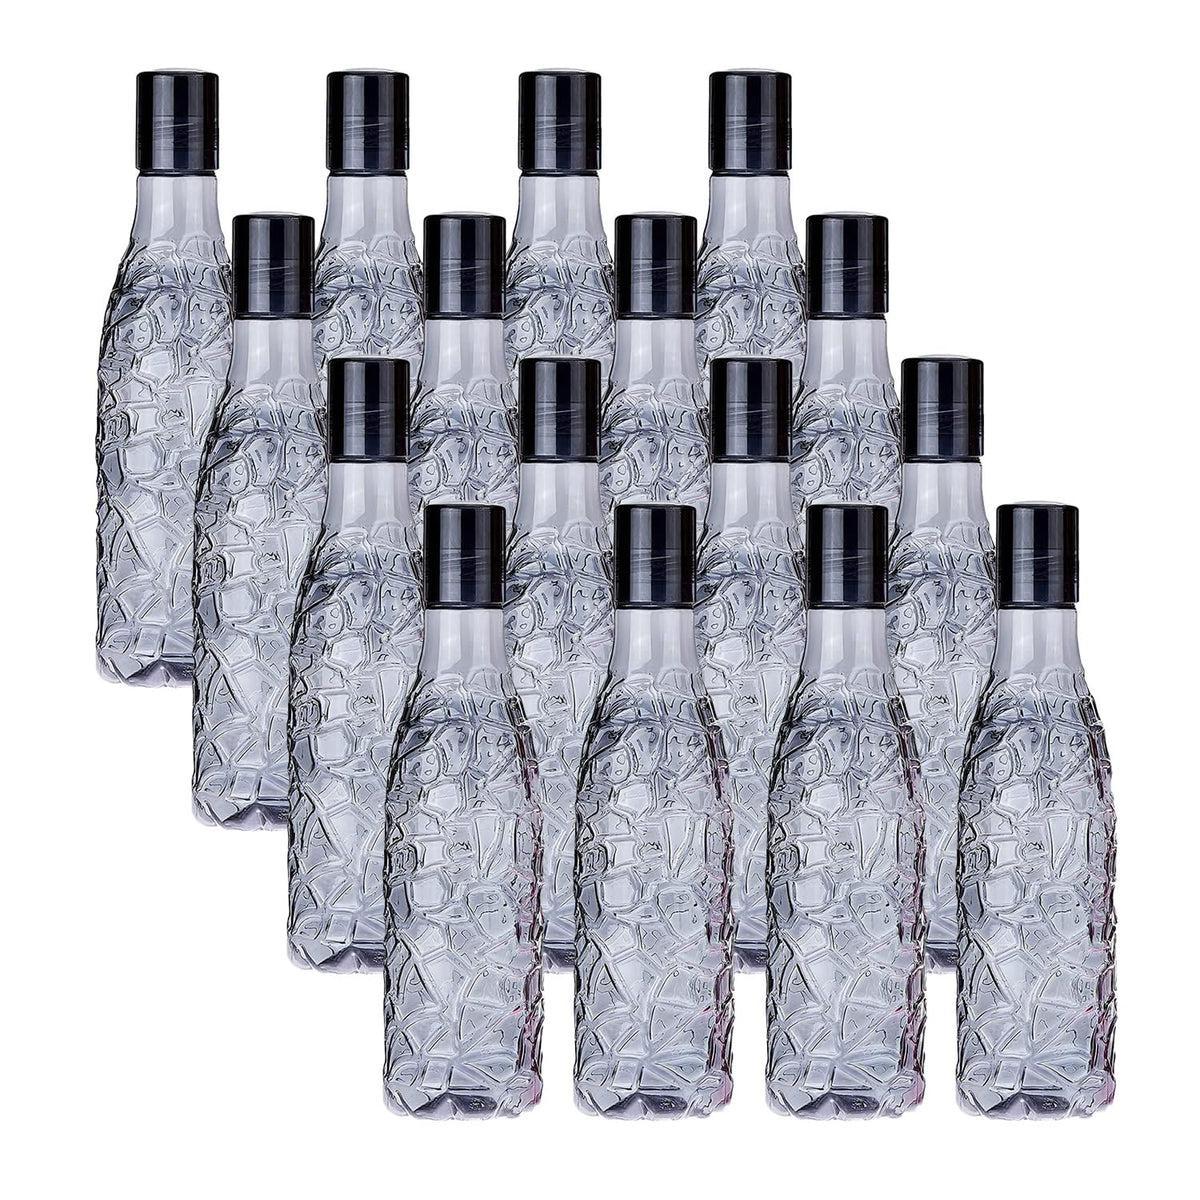 Kuber Industries BPA-Free Plastic Water Bottle|Leak Proof, Firm Grip, 100% Food Grade Plastic Bottles|For Home, Office, & Gym|Unbreakable, Freezer Proof, Fridge Water Bottle|Set Of 4|Black (Pack Of 4)